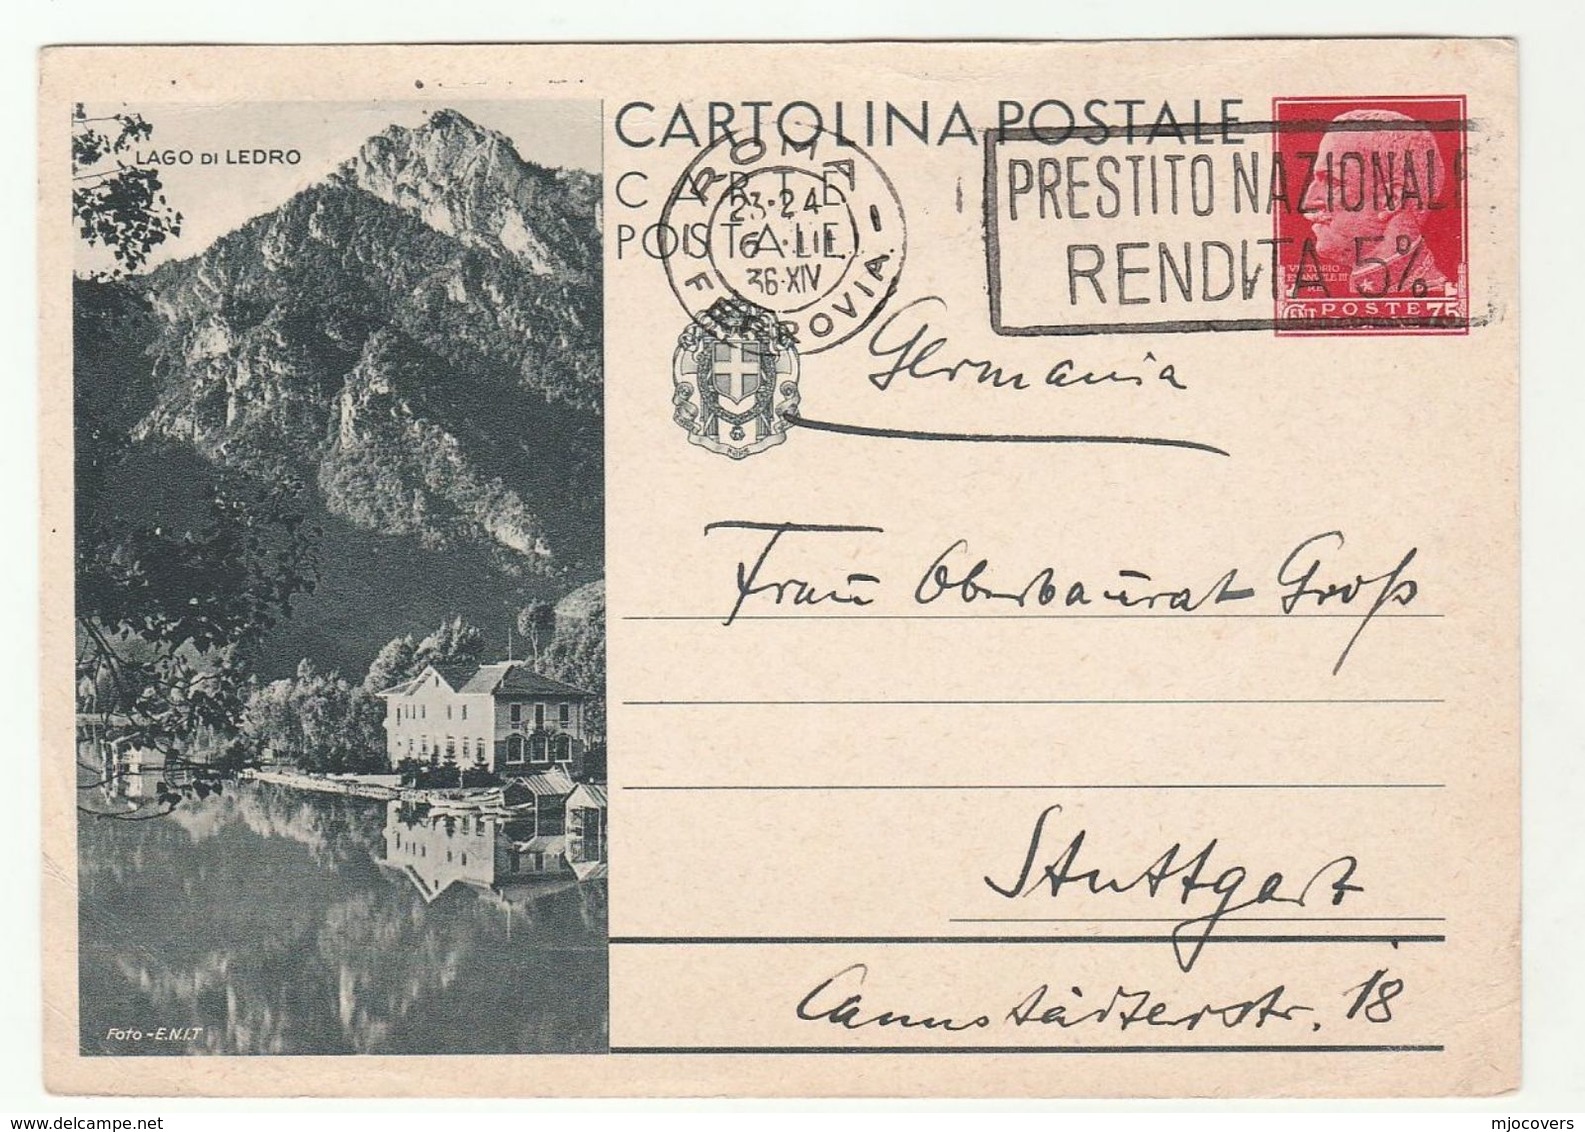 1936 LAGO Di LEDRO Illus STATIONERY CARD Rome Italy To Stuttgart SLOGAN Prestito Nazional Rendita Banking, Cover - Stamped Stationery